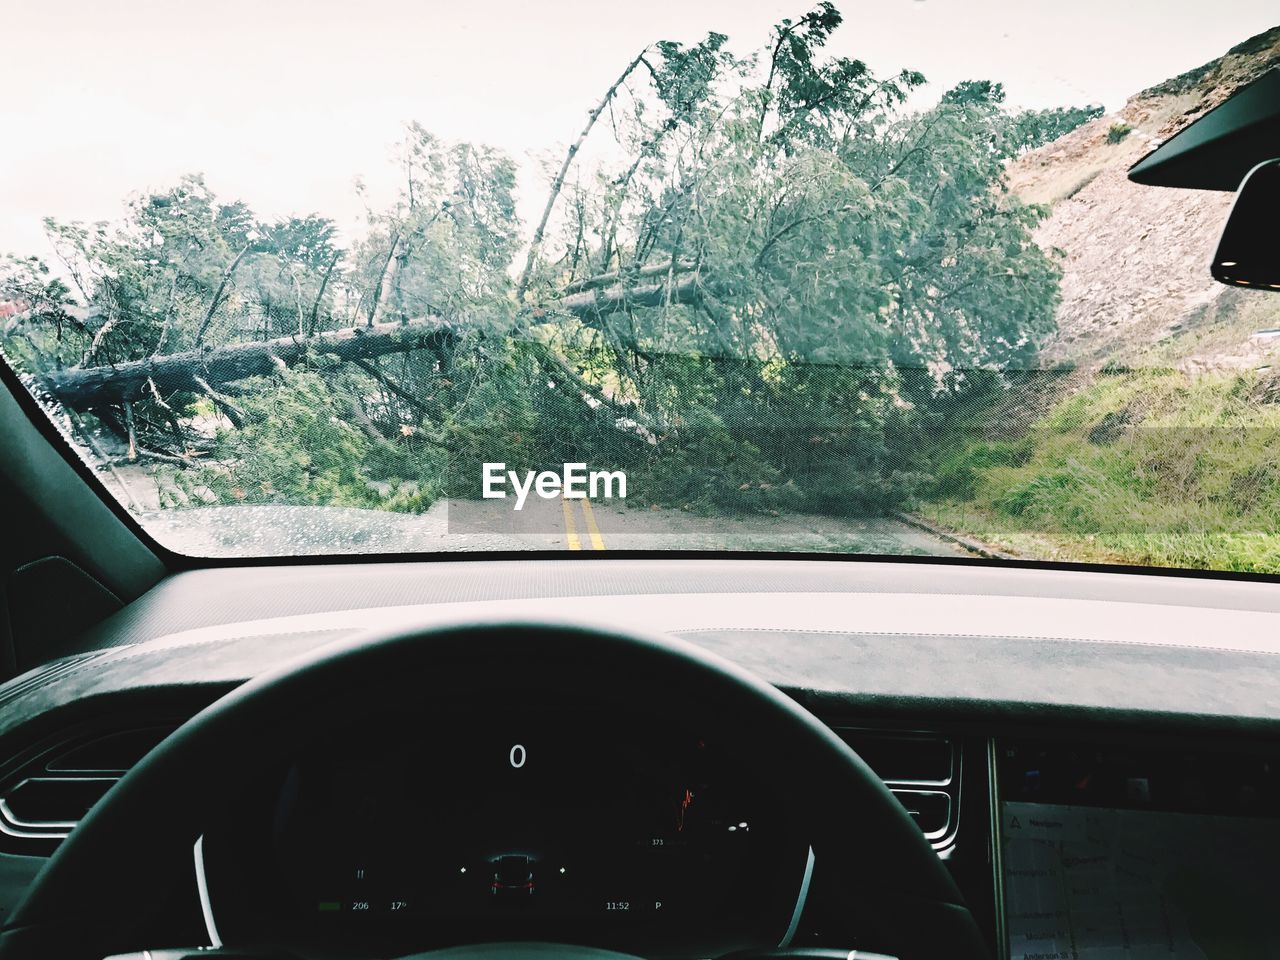 Fallen tree seen through windshield of car